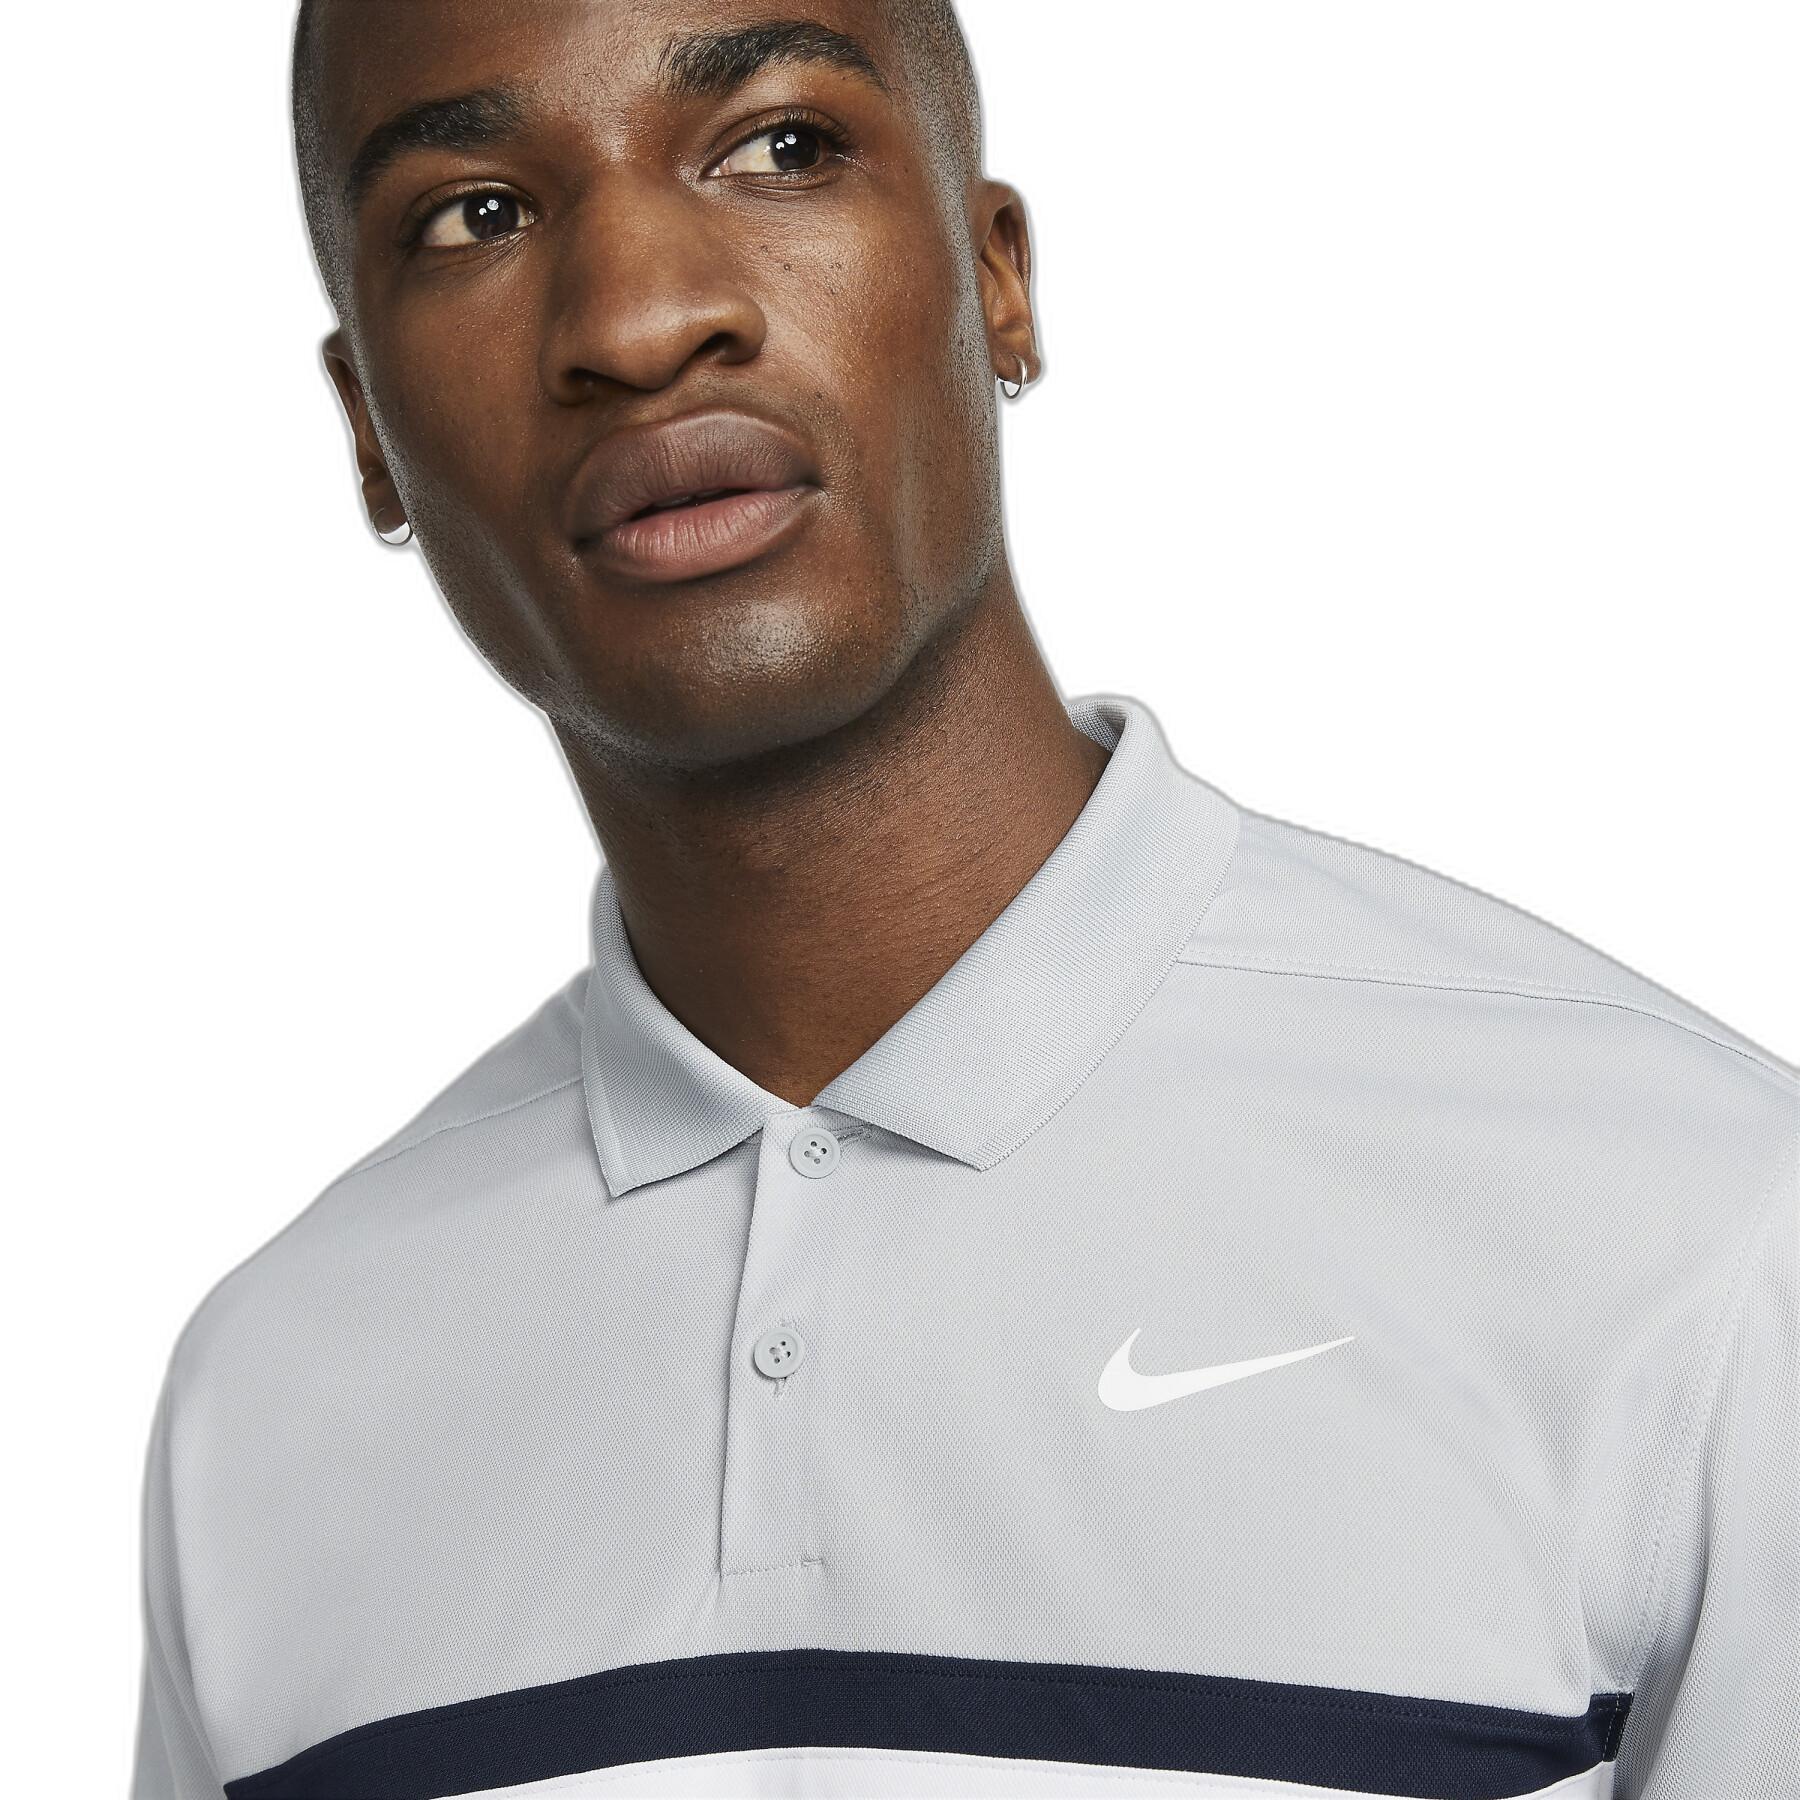 Polo-Shirt Nike Victory Golf